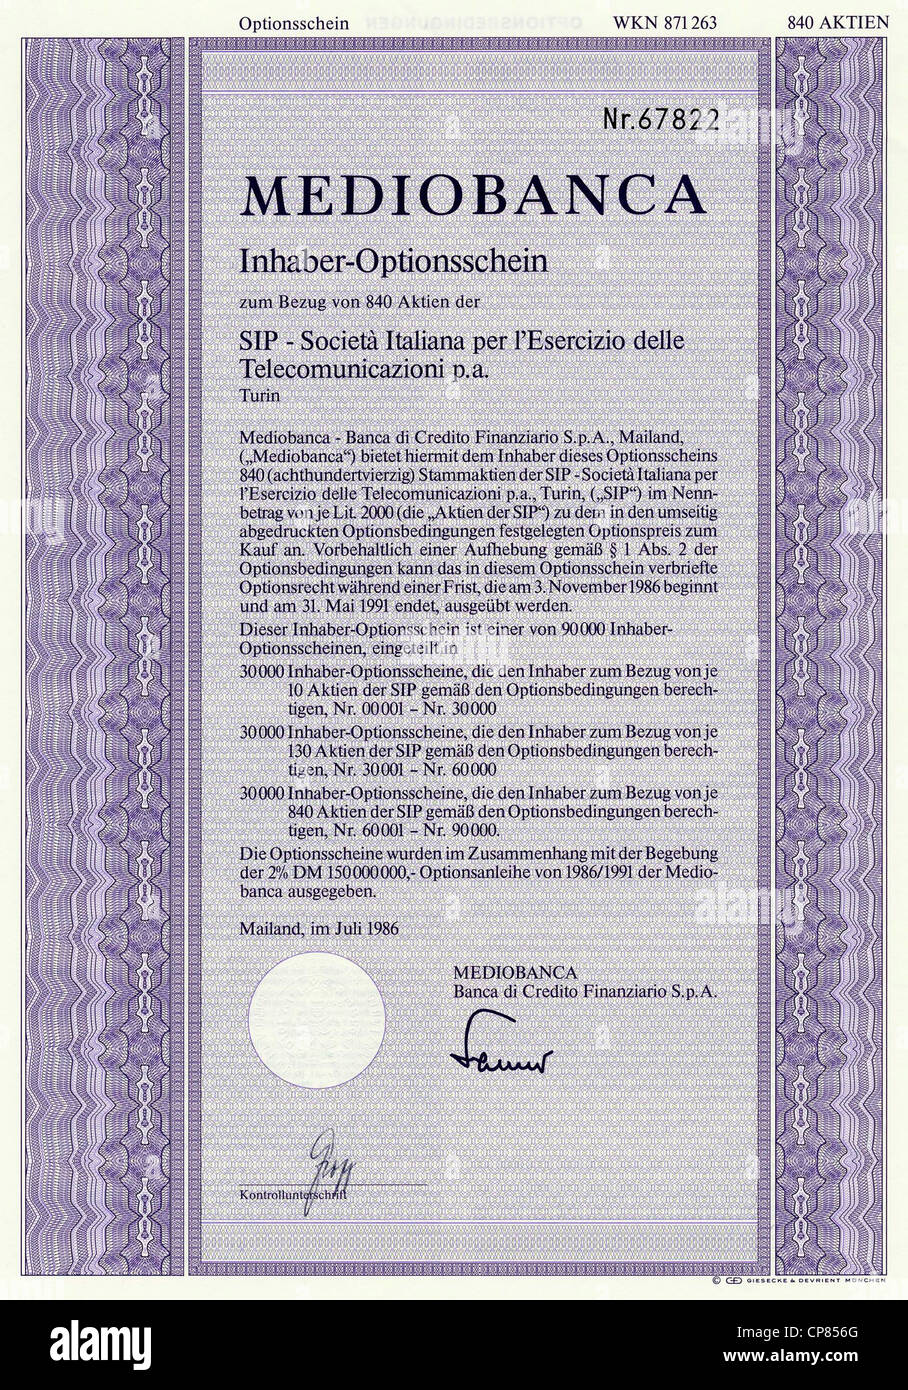 Historic Stock certificato, certificato di titoli al portatore, warrant, Historisches Wertpapier, Inhaber-Optionsschein, italienische Foto Stock